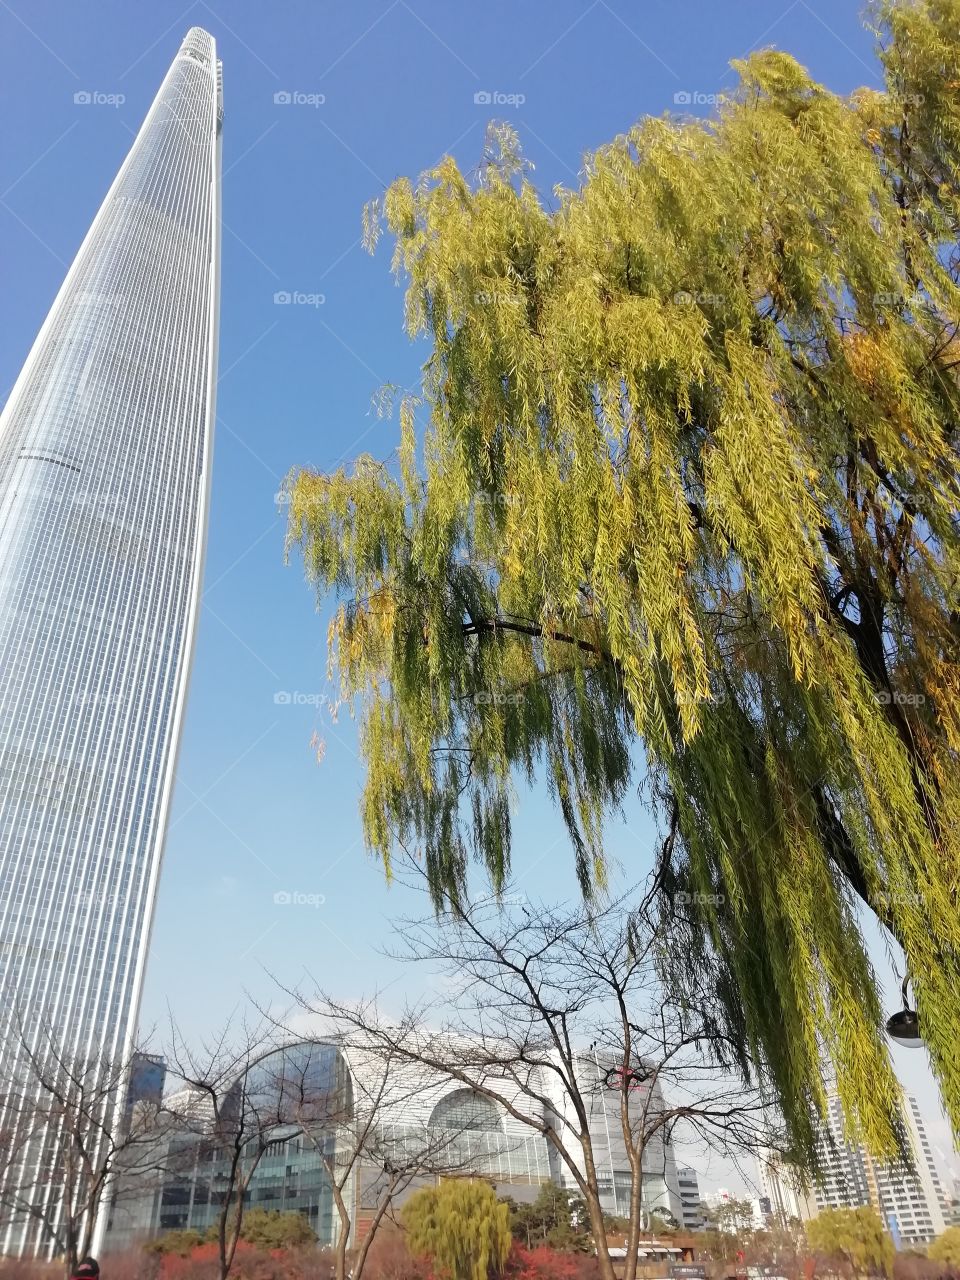 Lotte world tower, Seoul